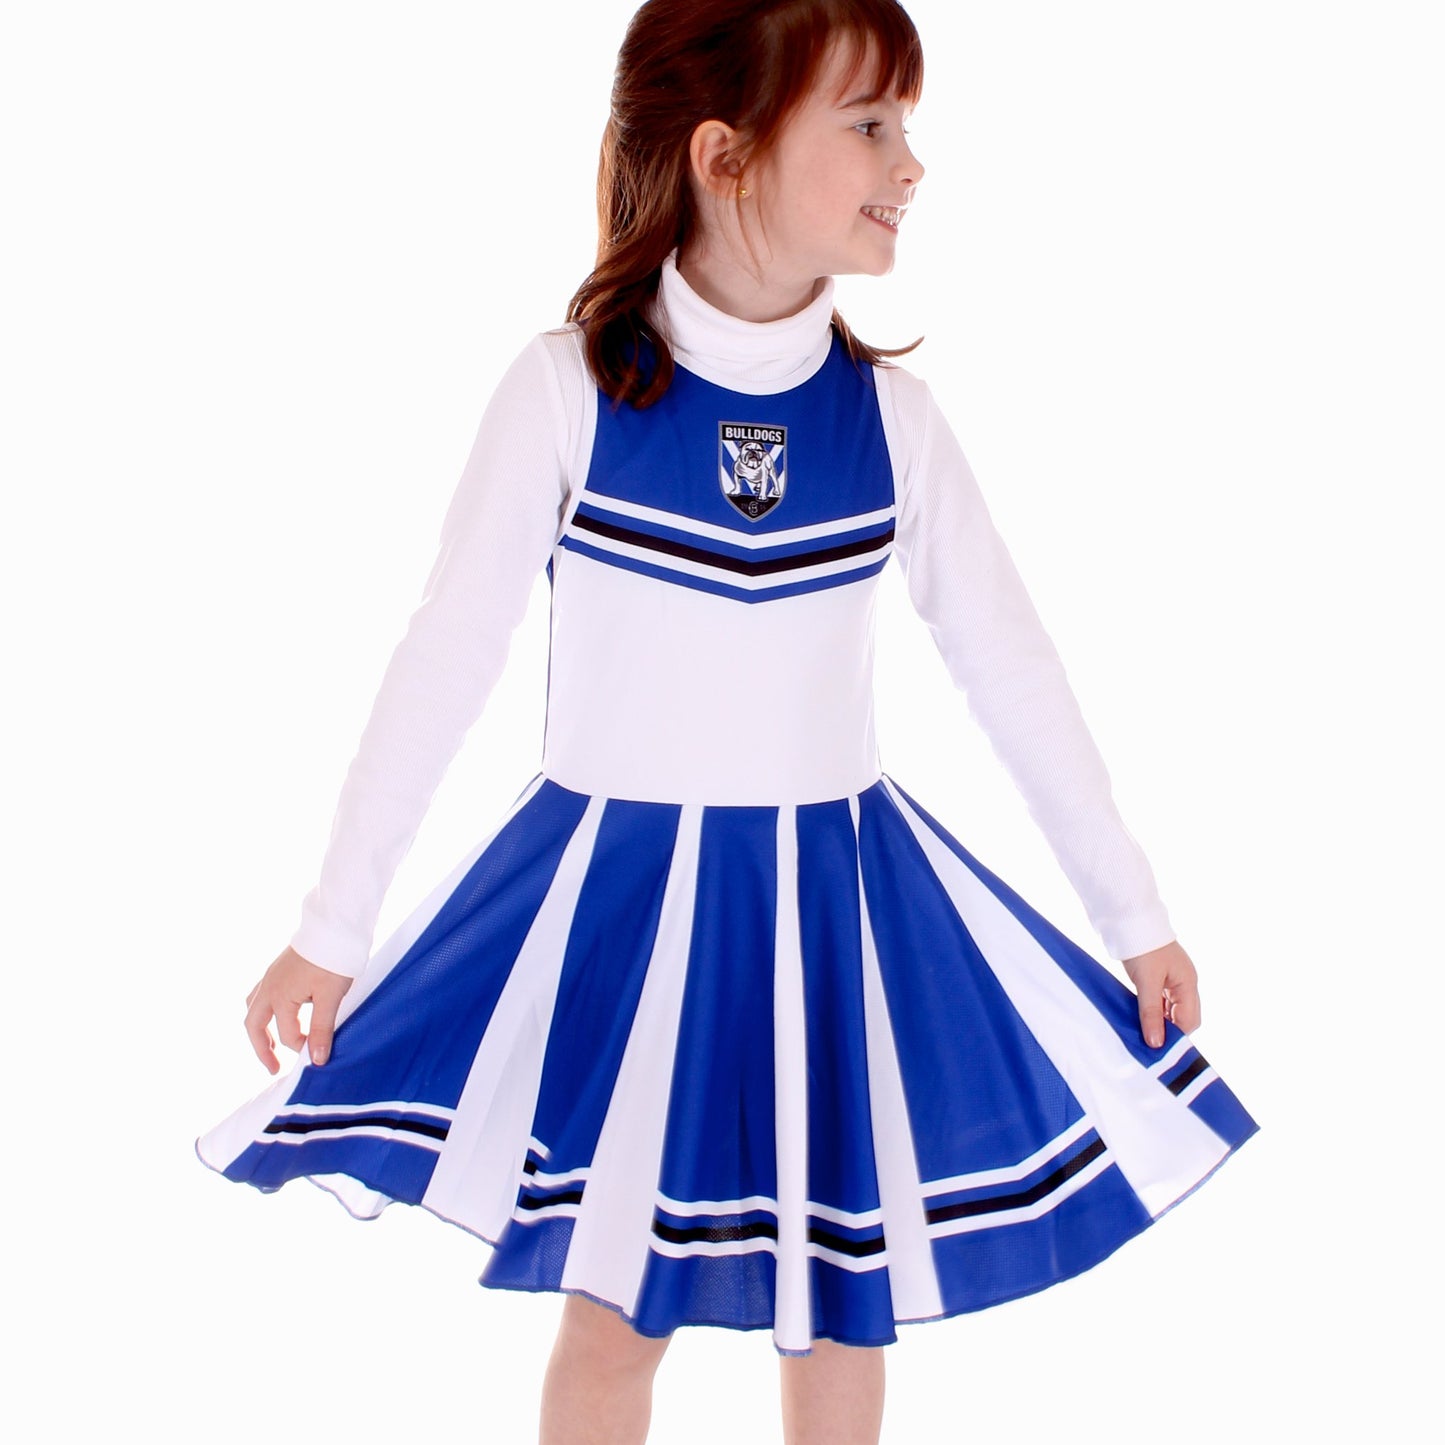 Bulldogs Cheerleader Dress